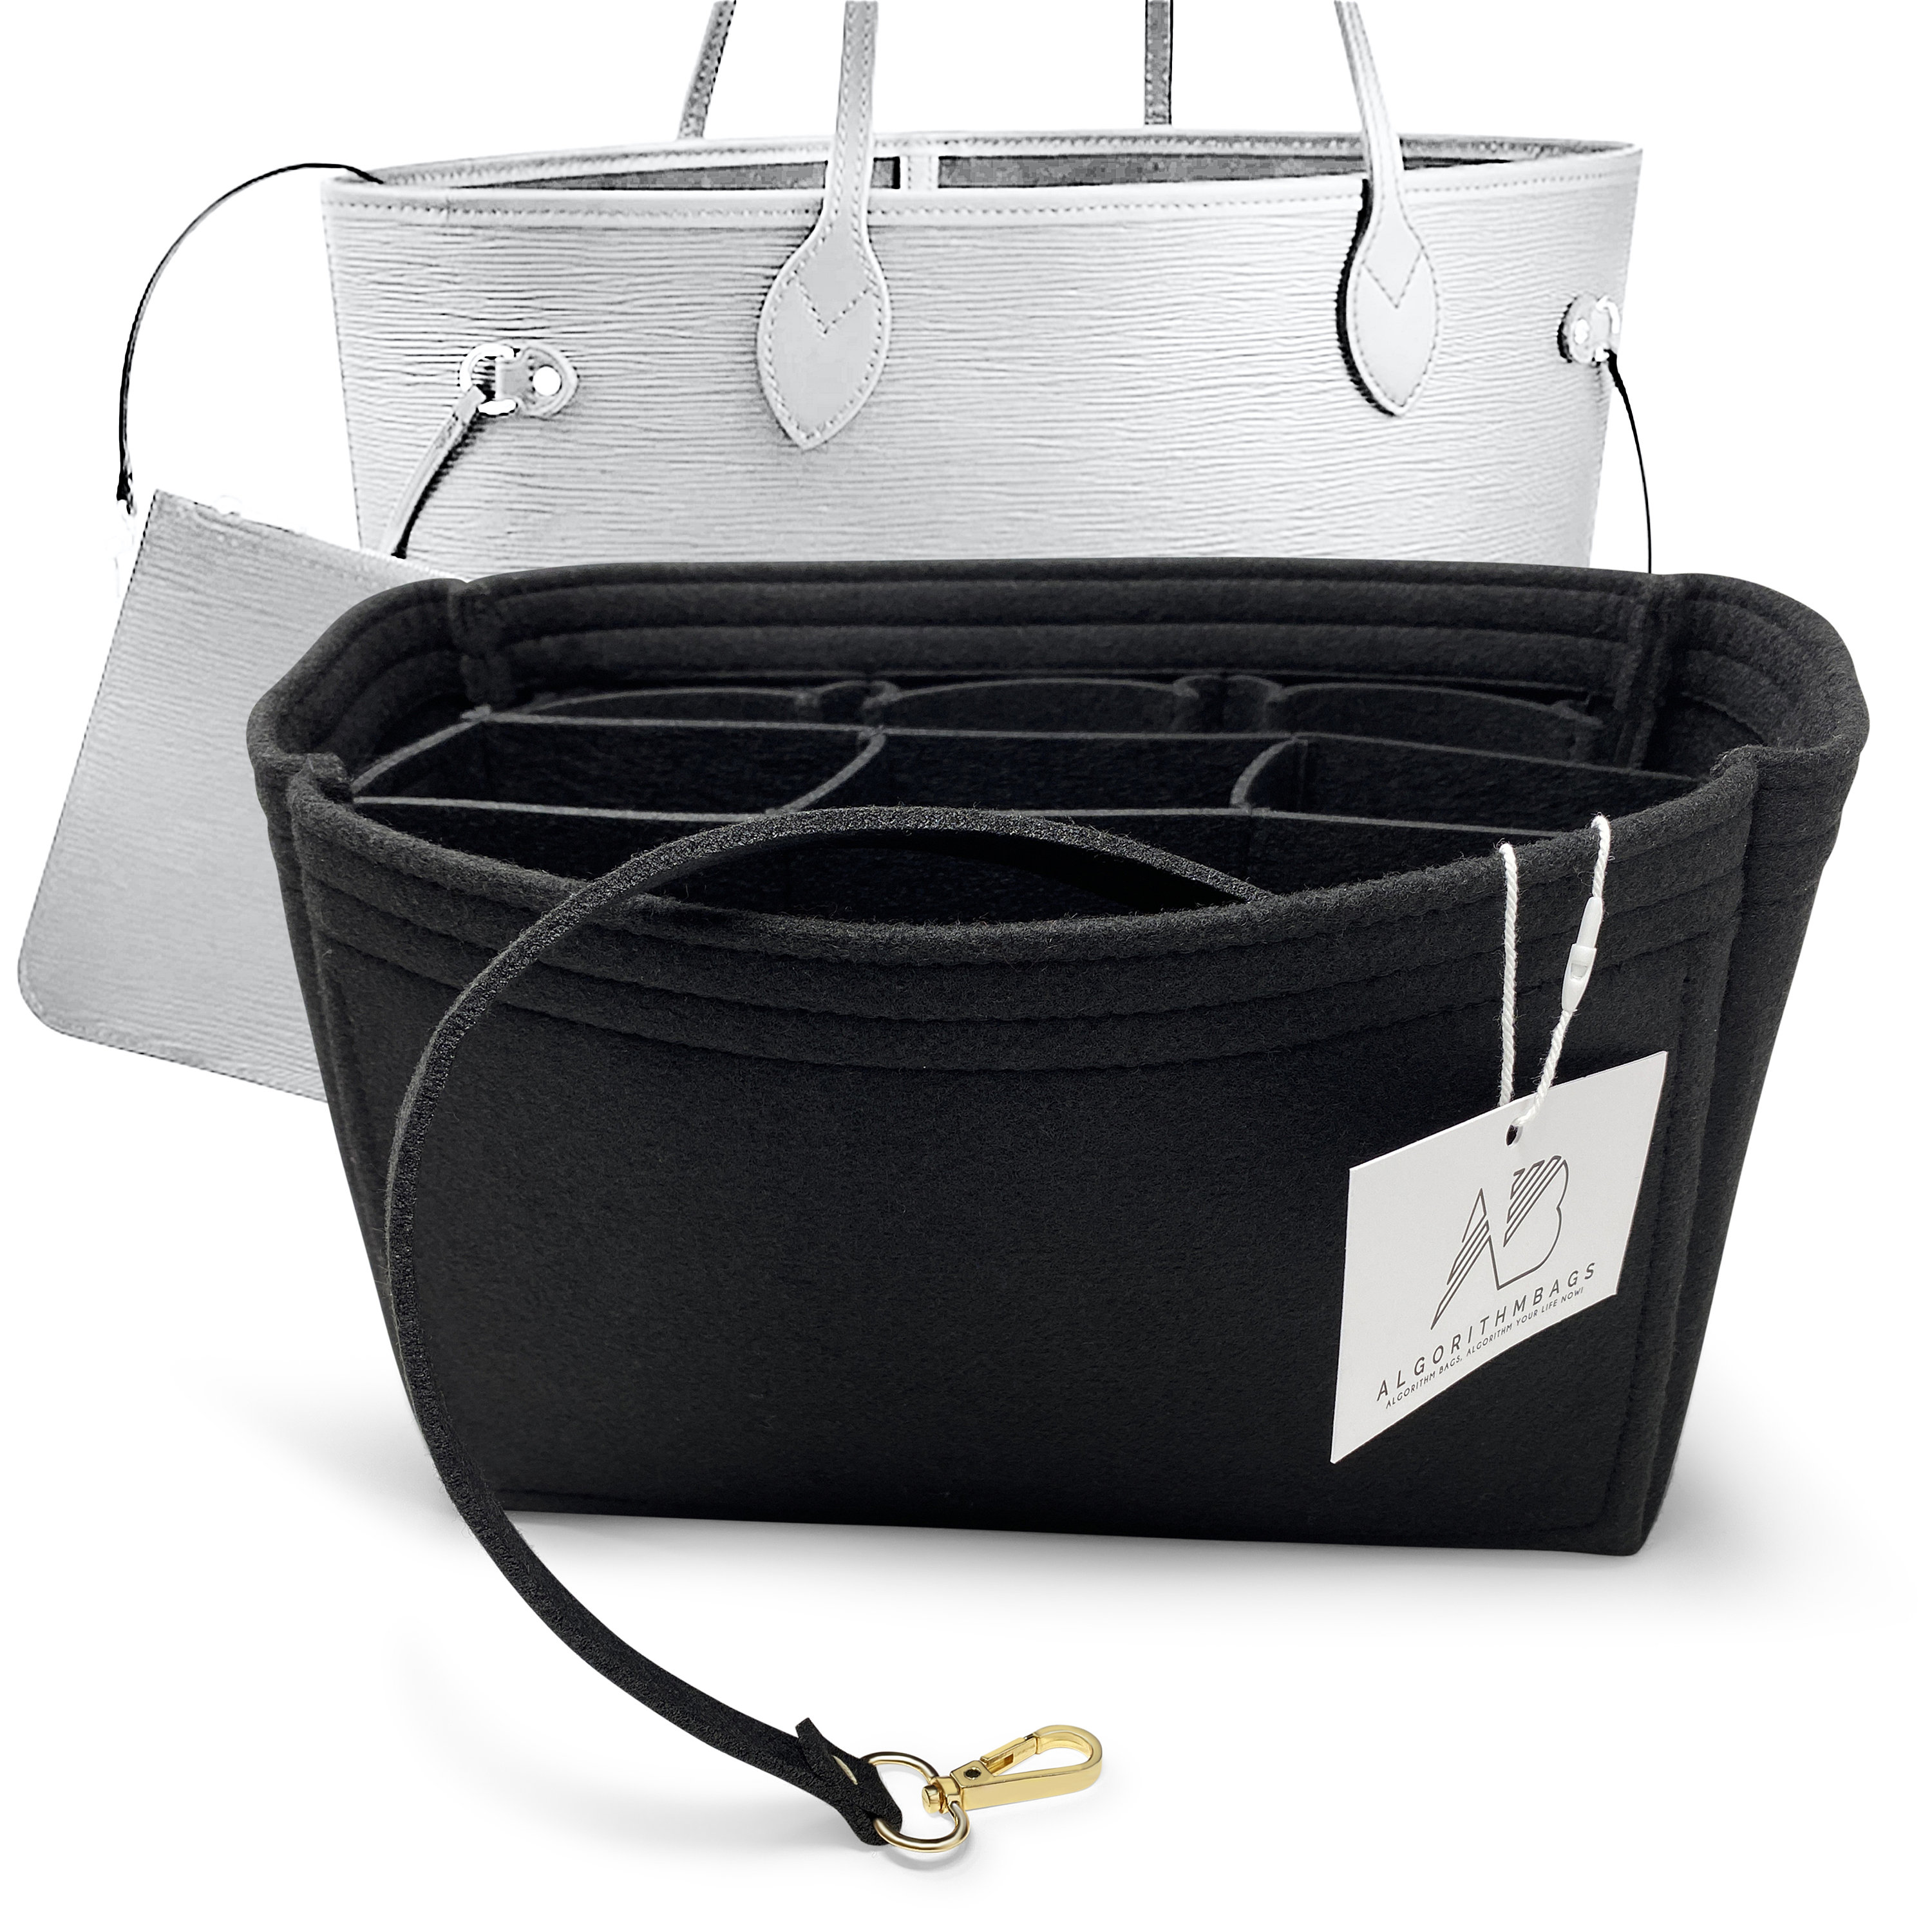 Bag Organizer for Louis Vuitton Neverfull MM – Fixed Zipper Top Cover